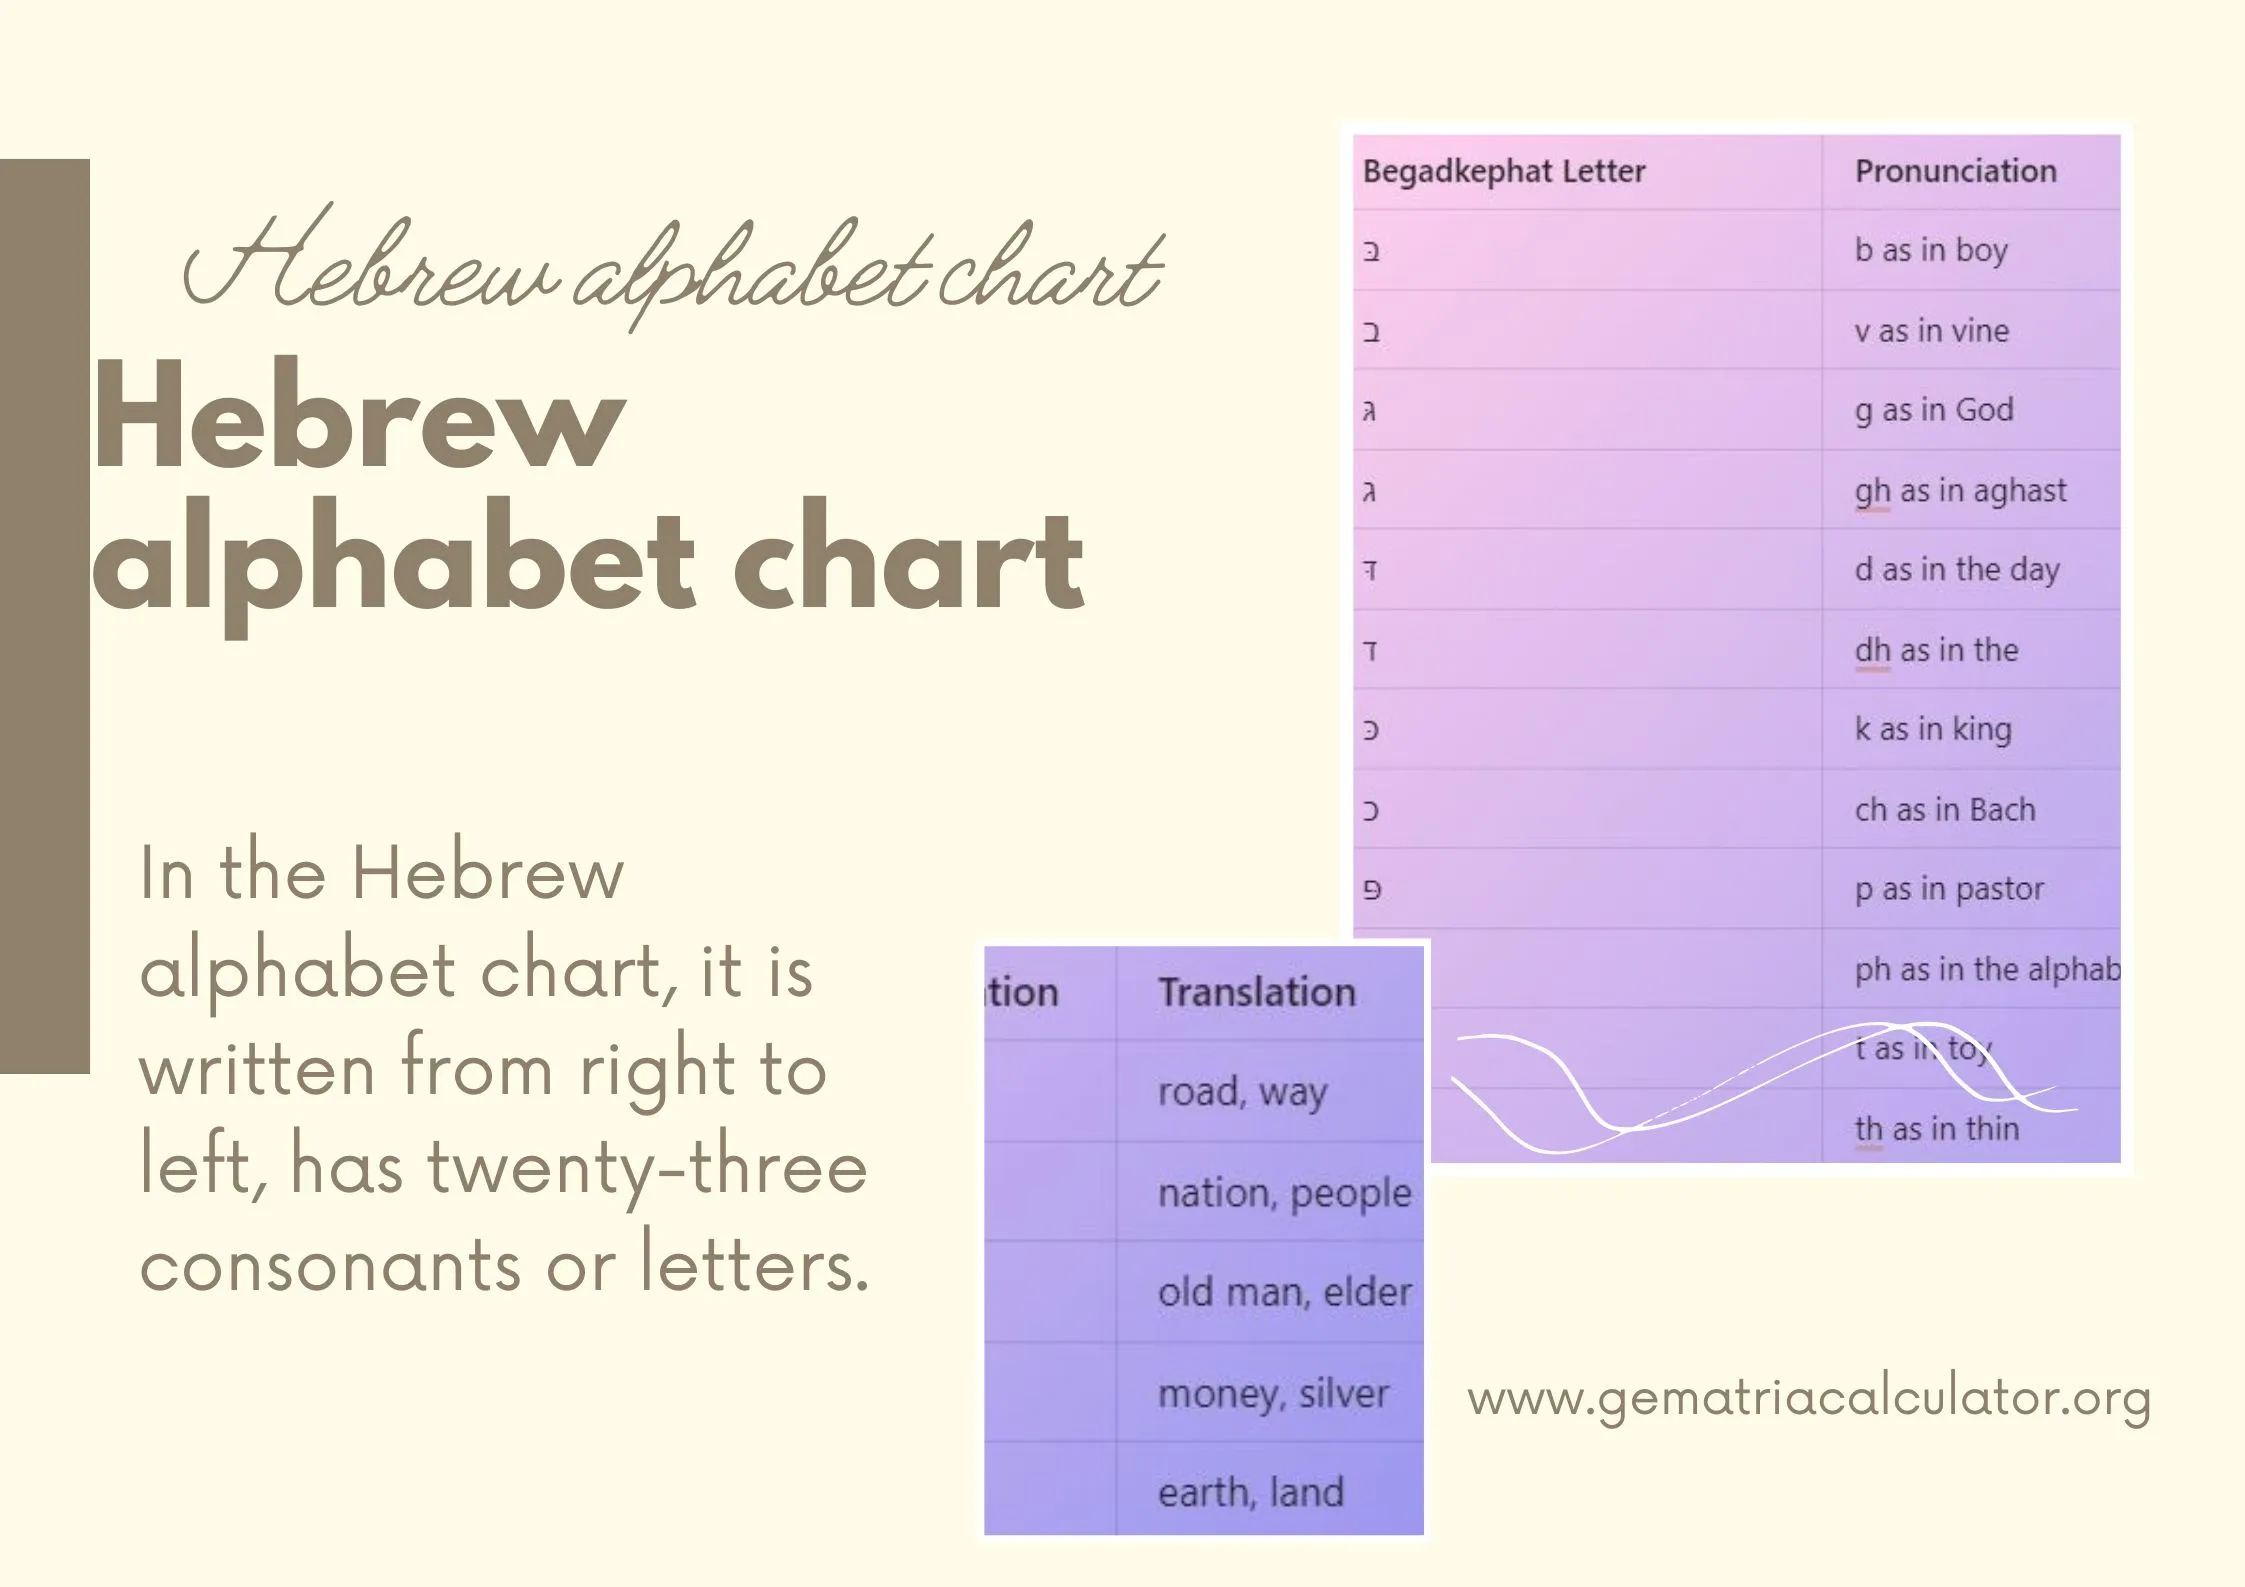 Hebrew alphabet chart